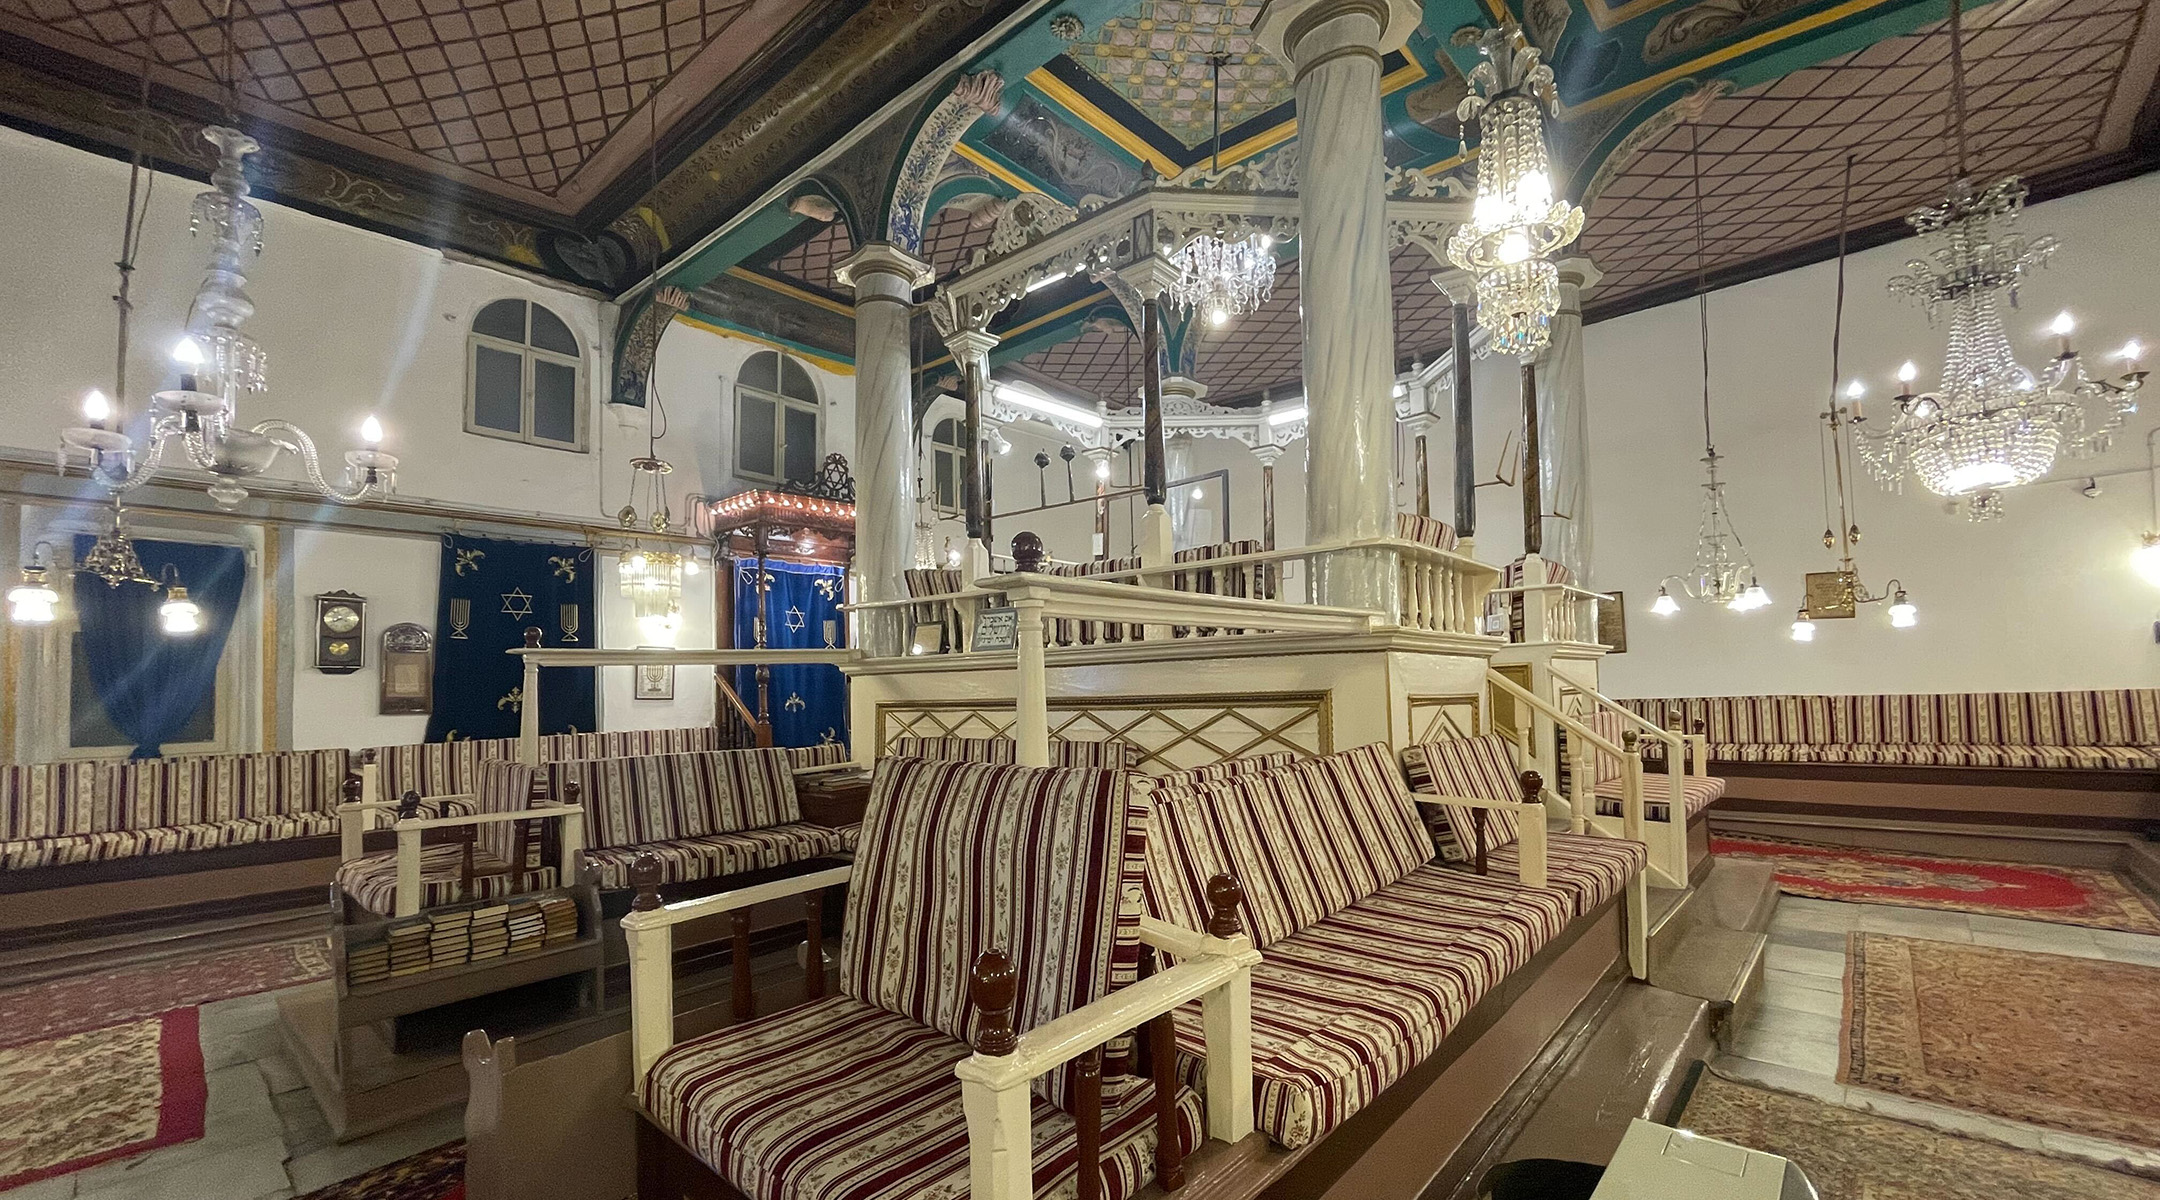 The Bikur Holim Synagogue is one of the few still functioning in Izmir. (David I. Klein)